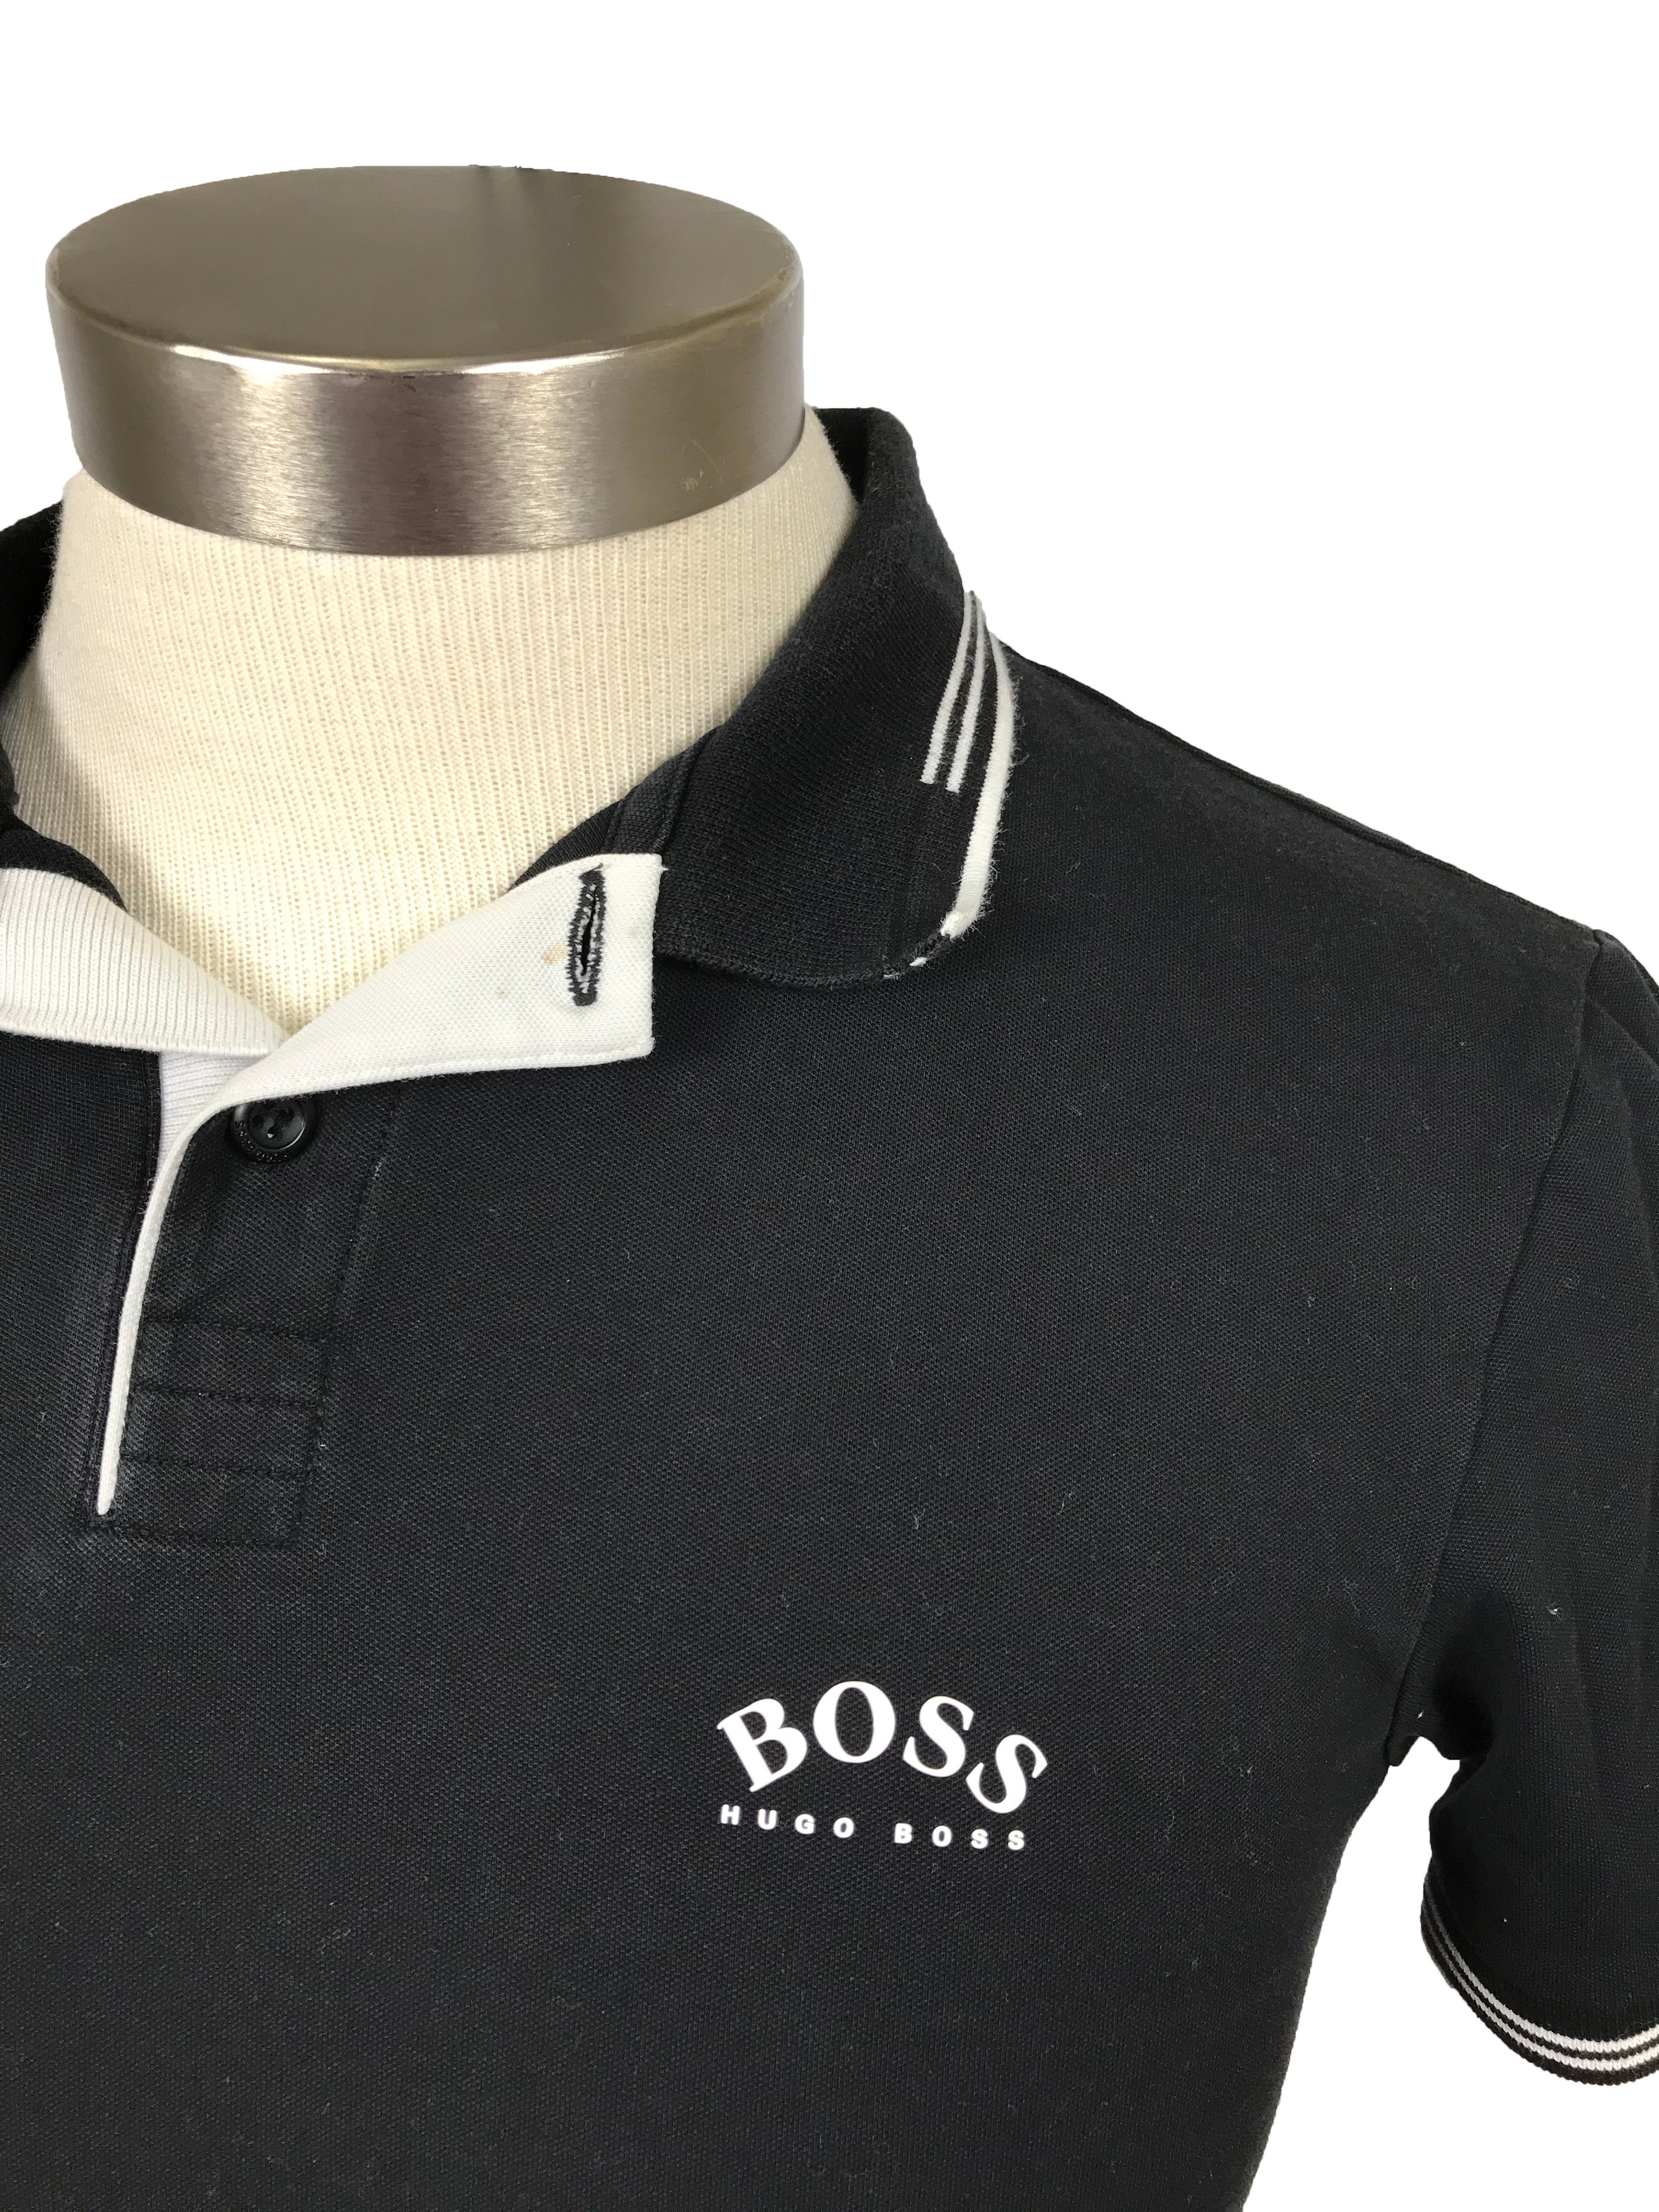 Hugo Boss Slim-Fit Black Polo Men's Size Small